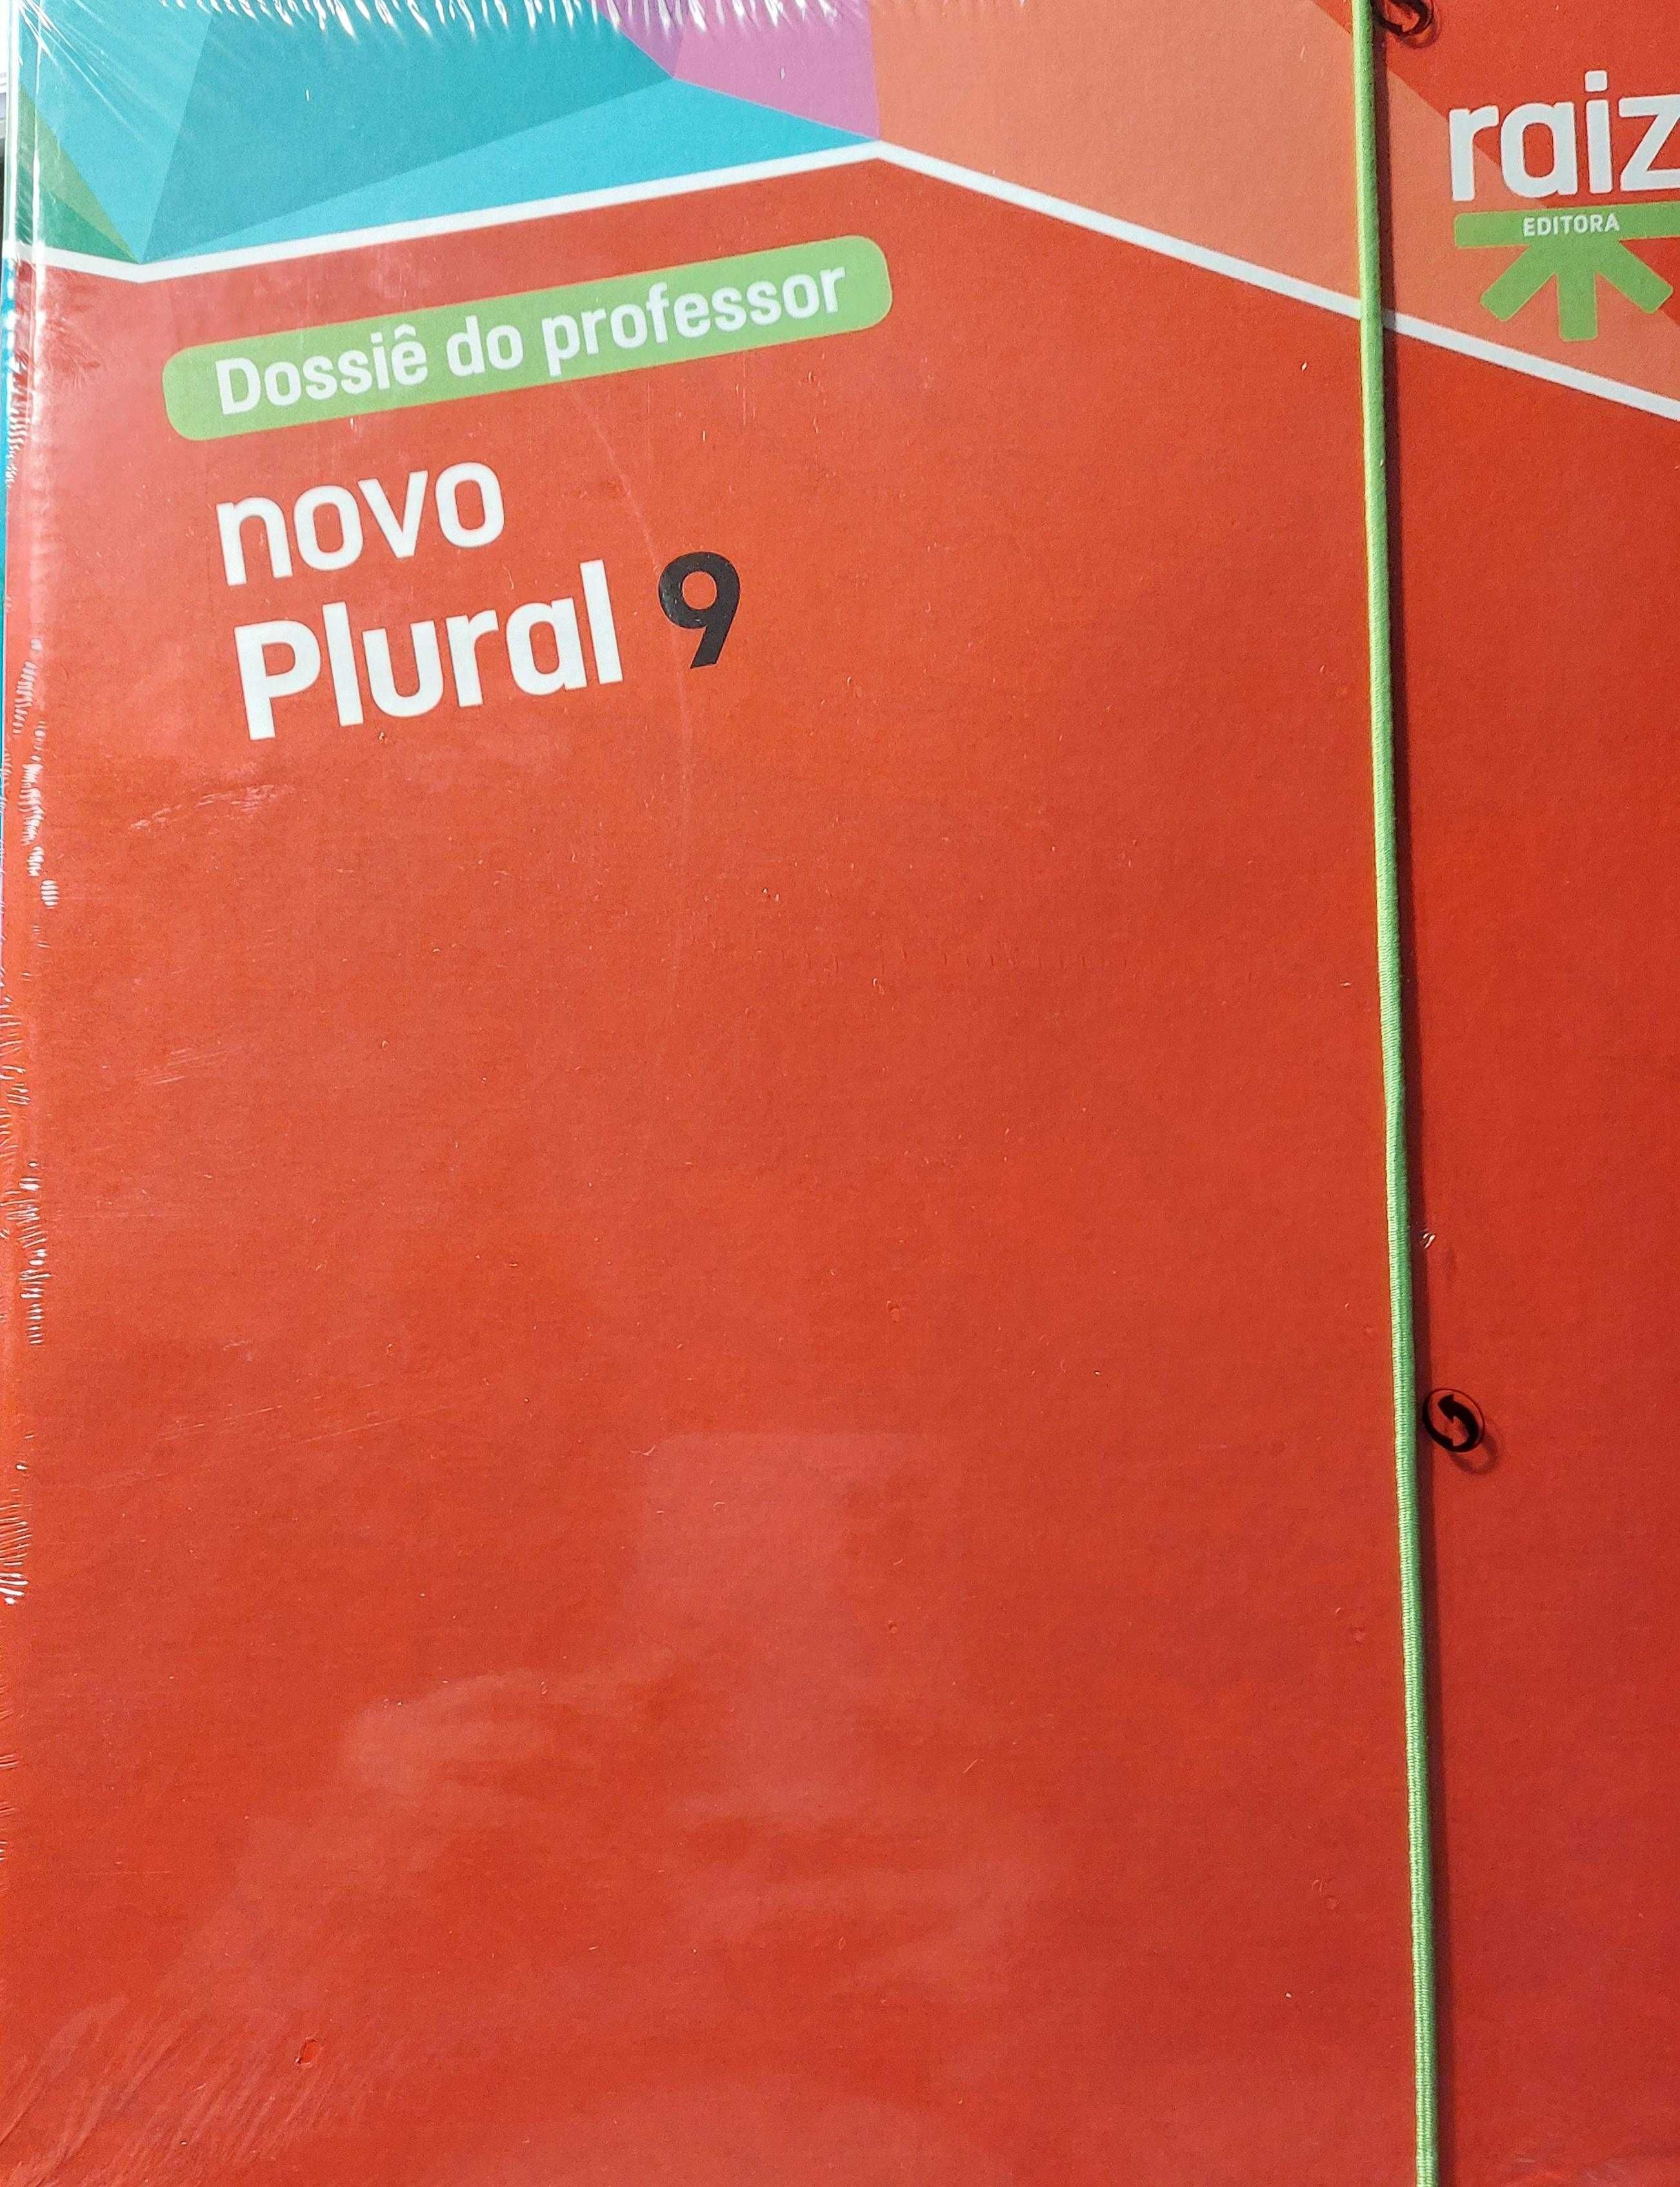 Manual do professor "Novo Plural 9"